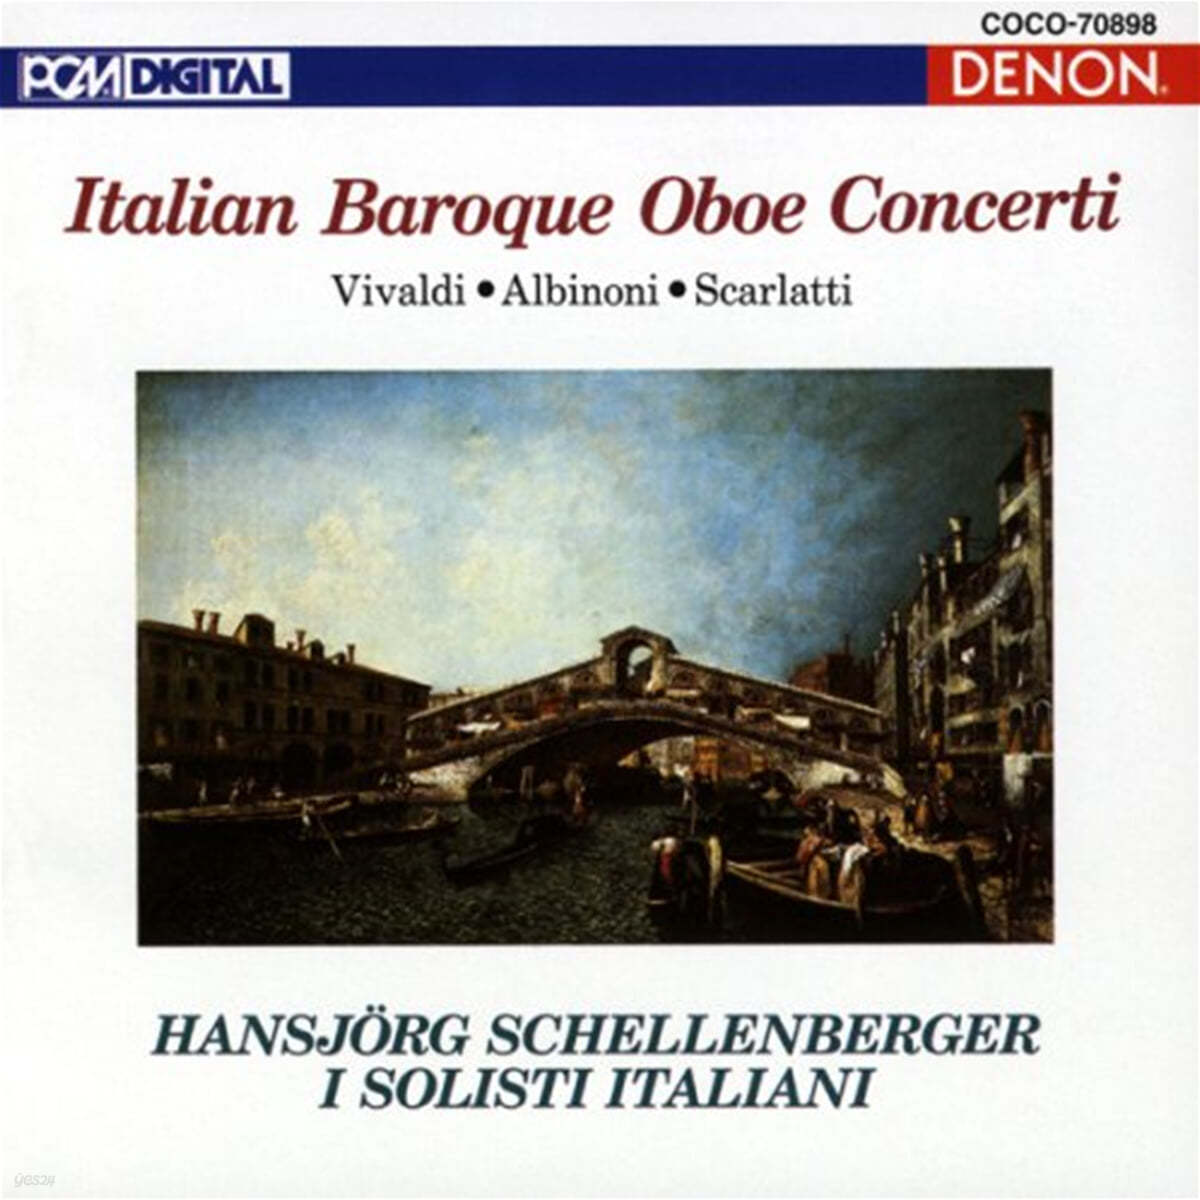 Hansjorg Schellenberger 이탈리안 바로크 오보에 협주곡 2집 - 알비노니 / 비발디 / 스카를라티 (Italian Baroque Oboe Concerti 2 - Albinoni / Vivaldi / Scarlatti) 